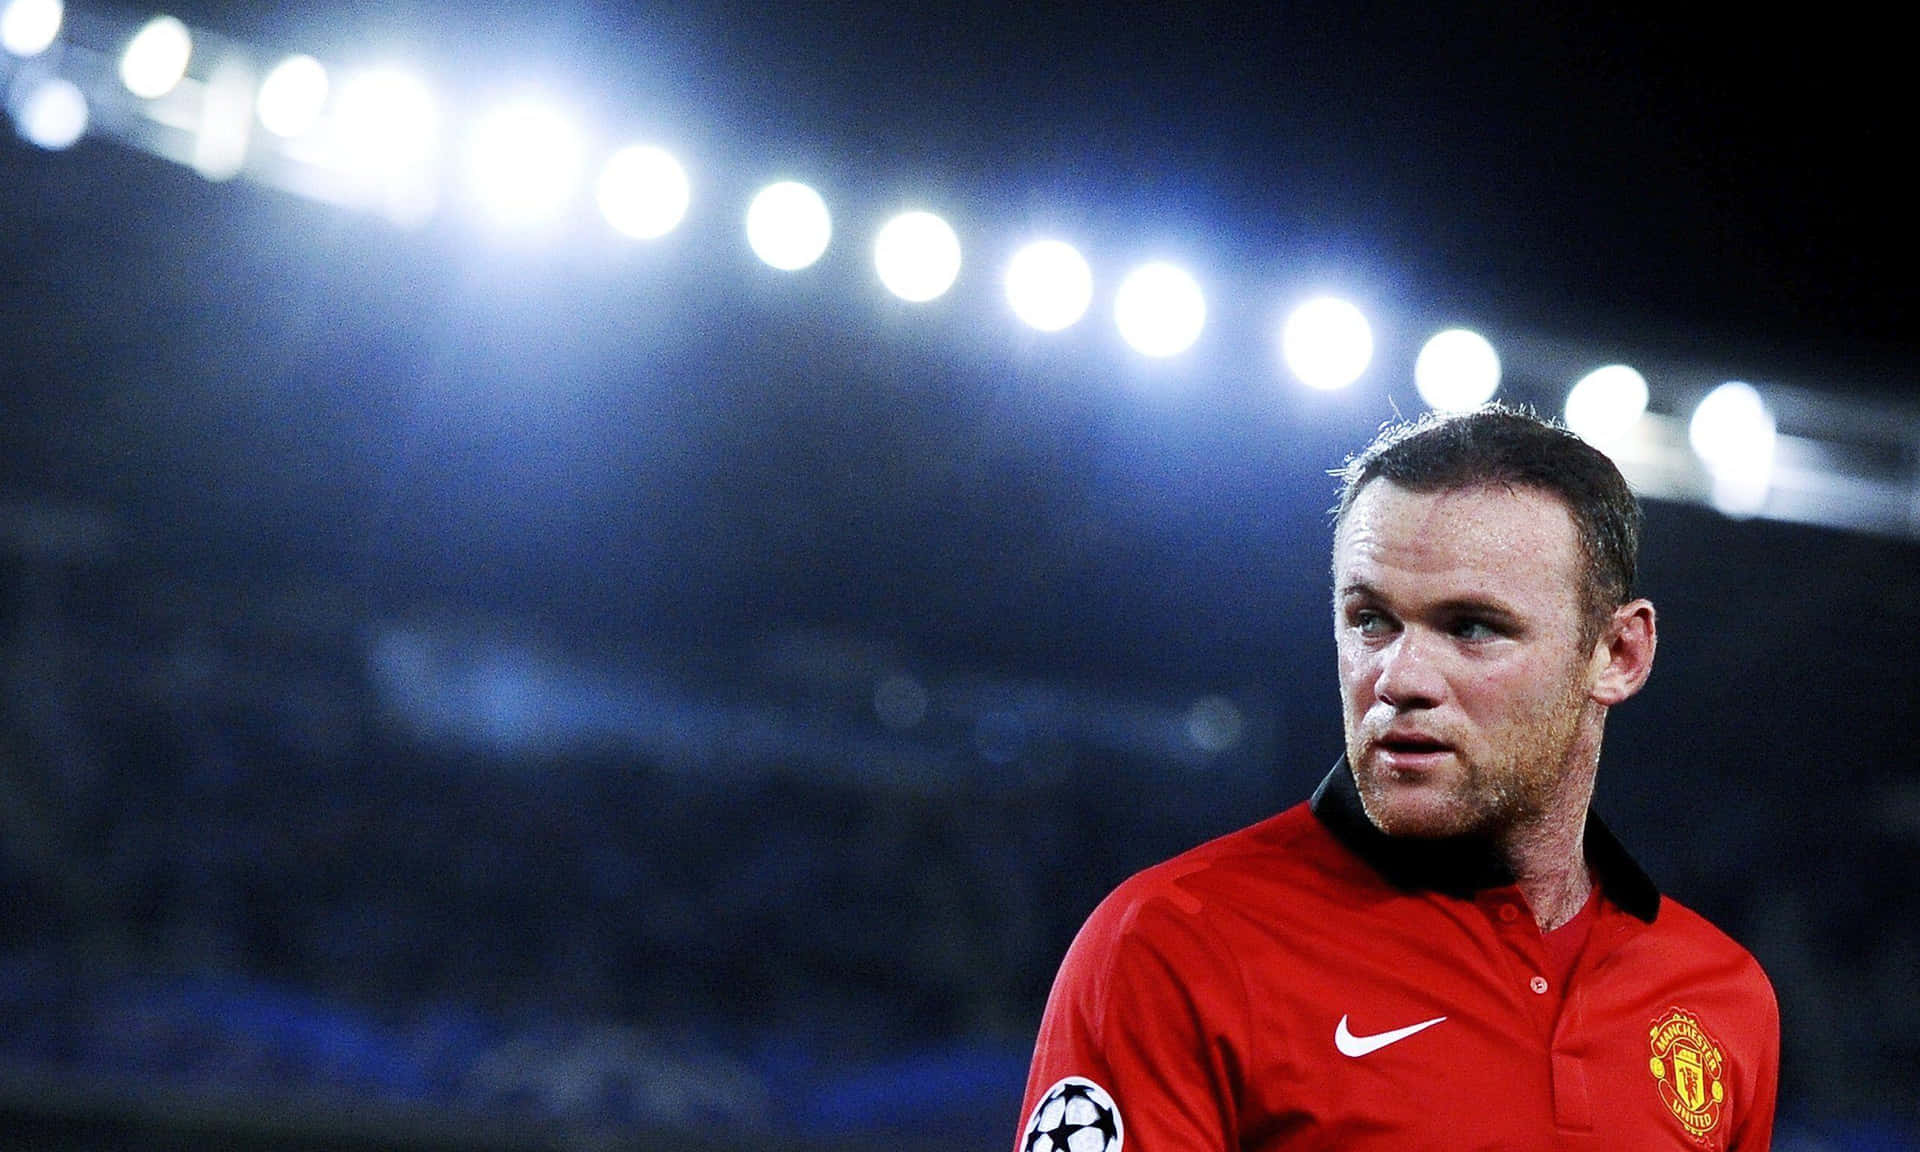 Wayne Rooney With Stadium Lights Picture